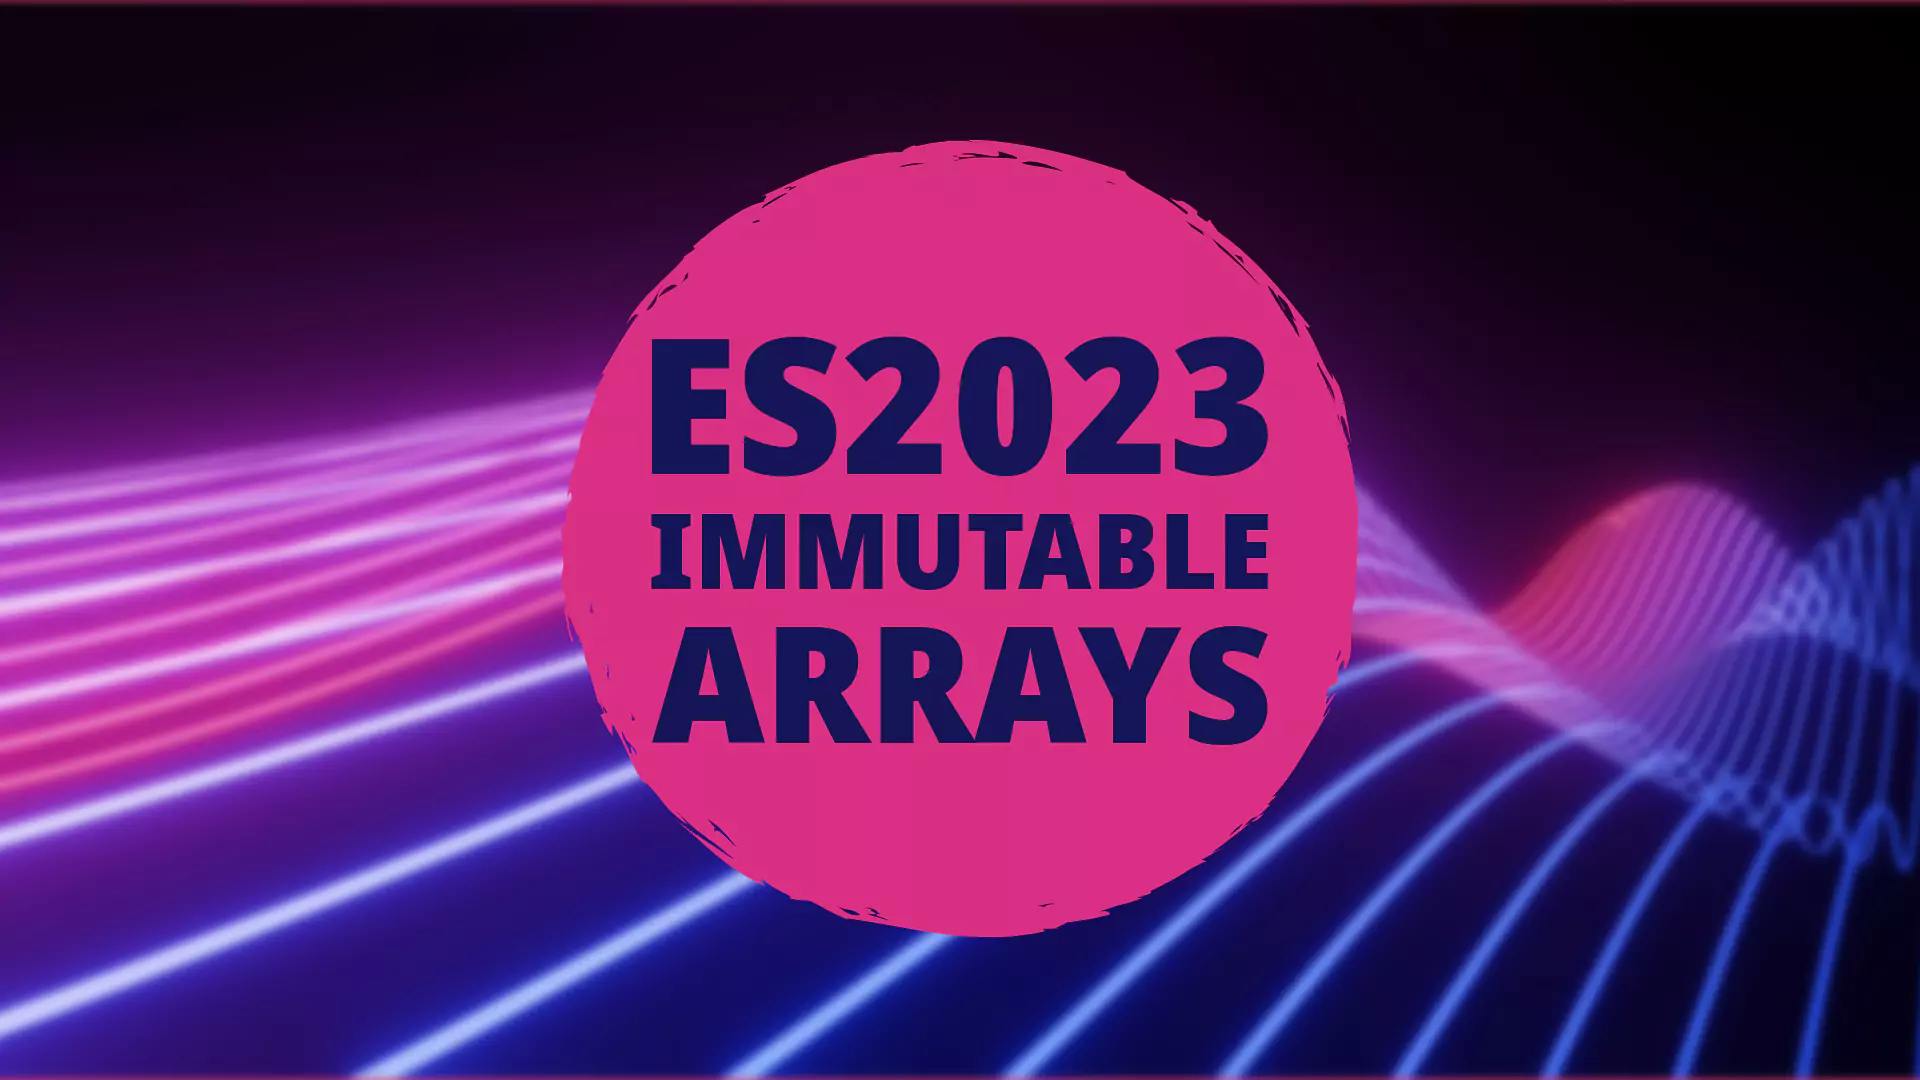 ES 2023 Immutable Arrays cover image